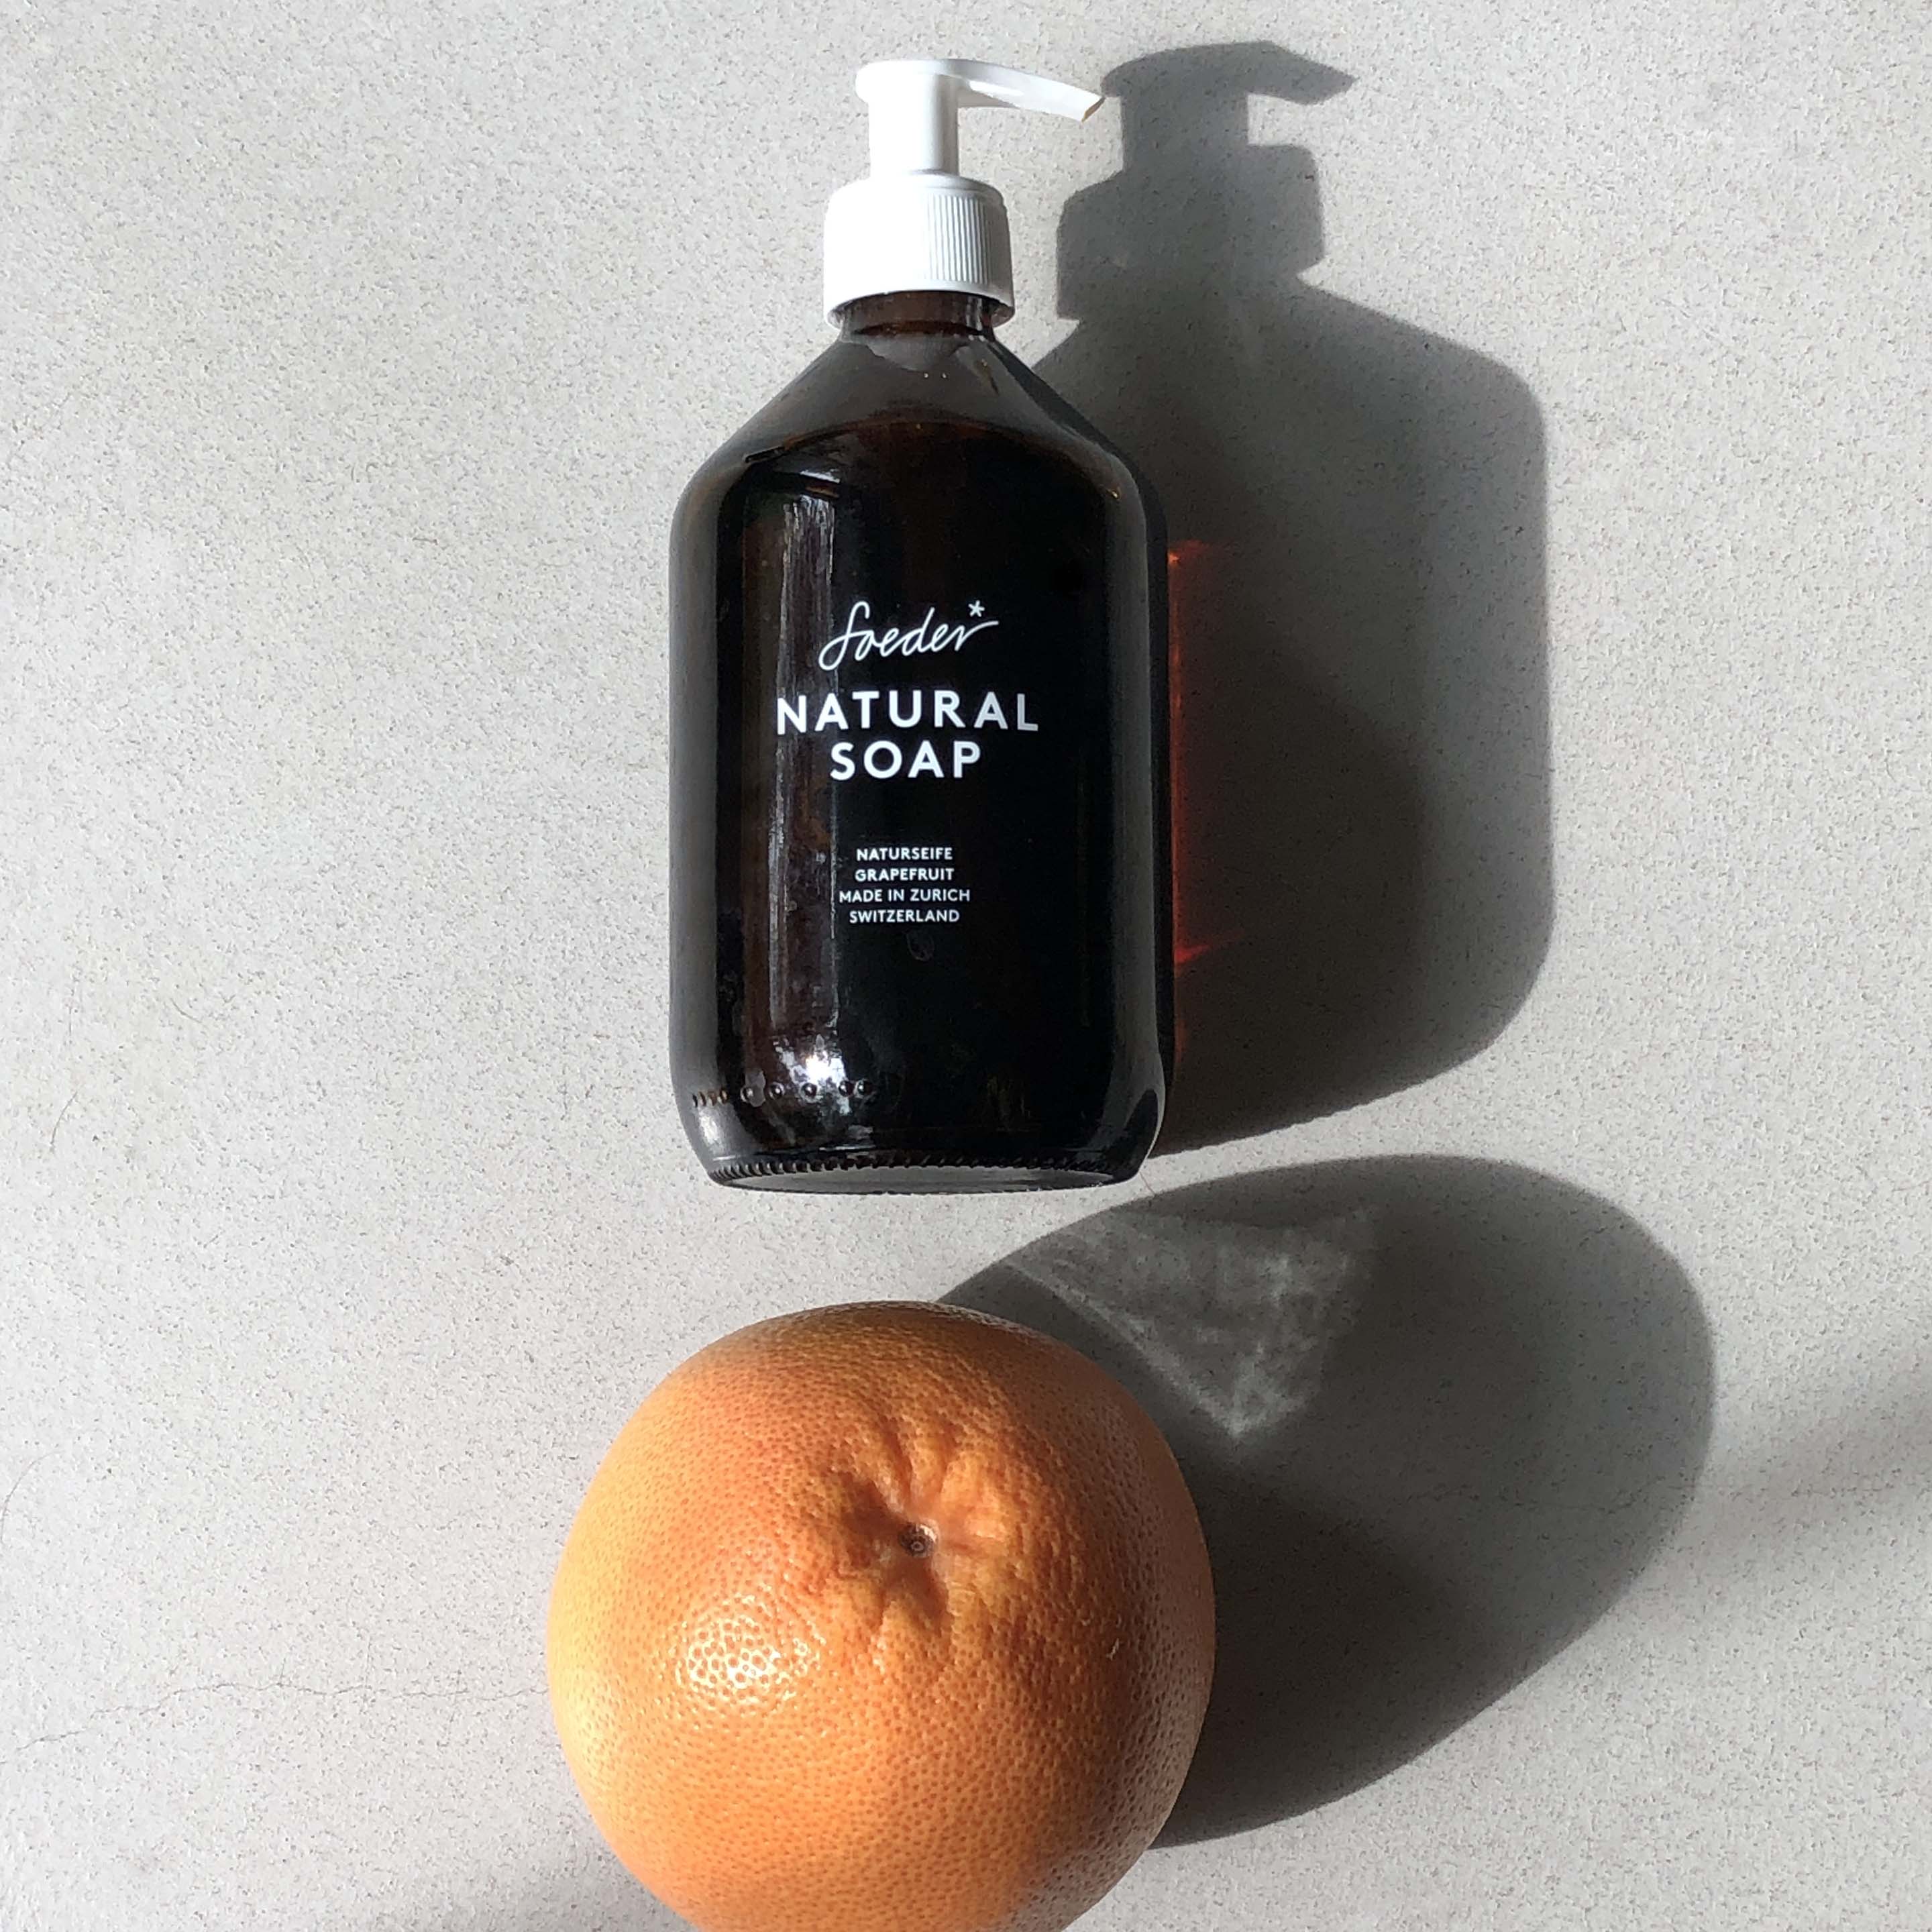 Natural Soap - Grapefruit 500 ml von soeder*